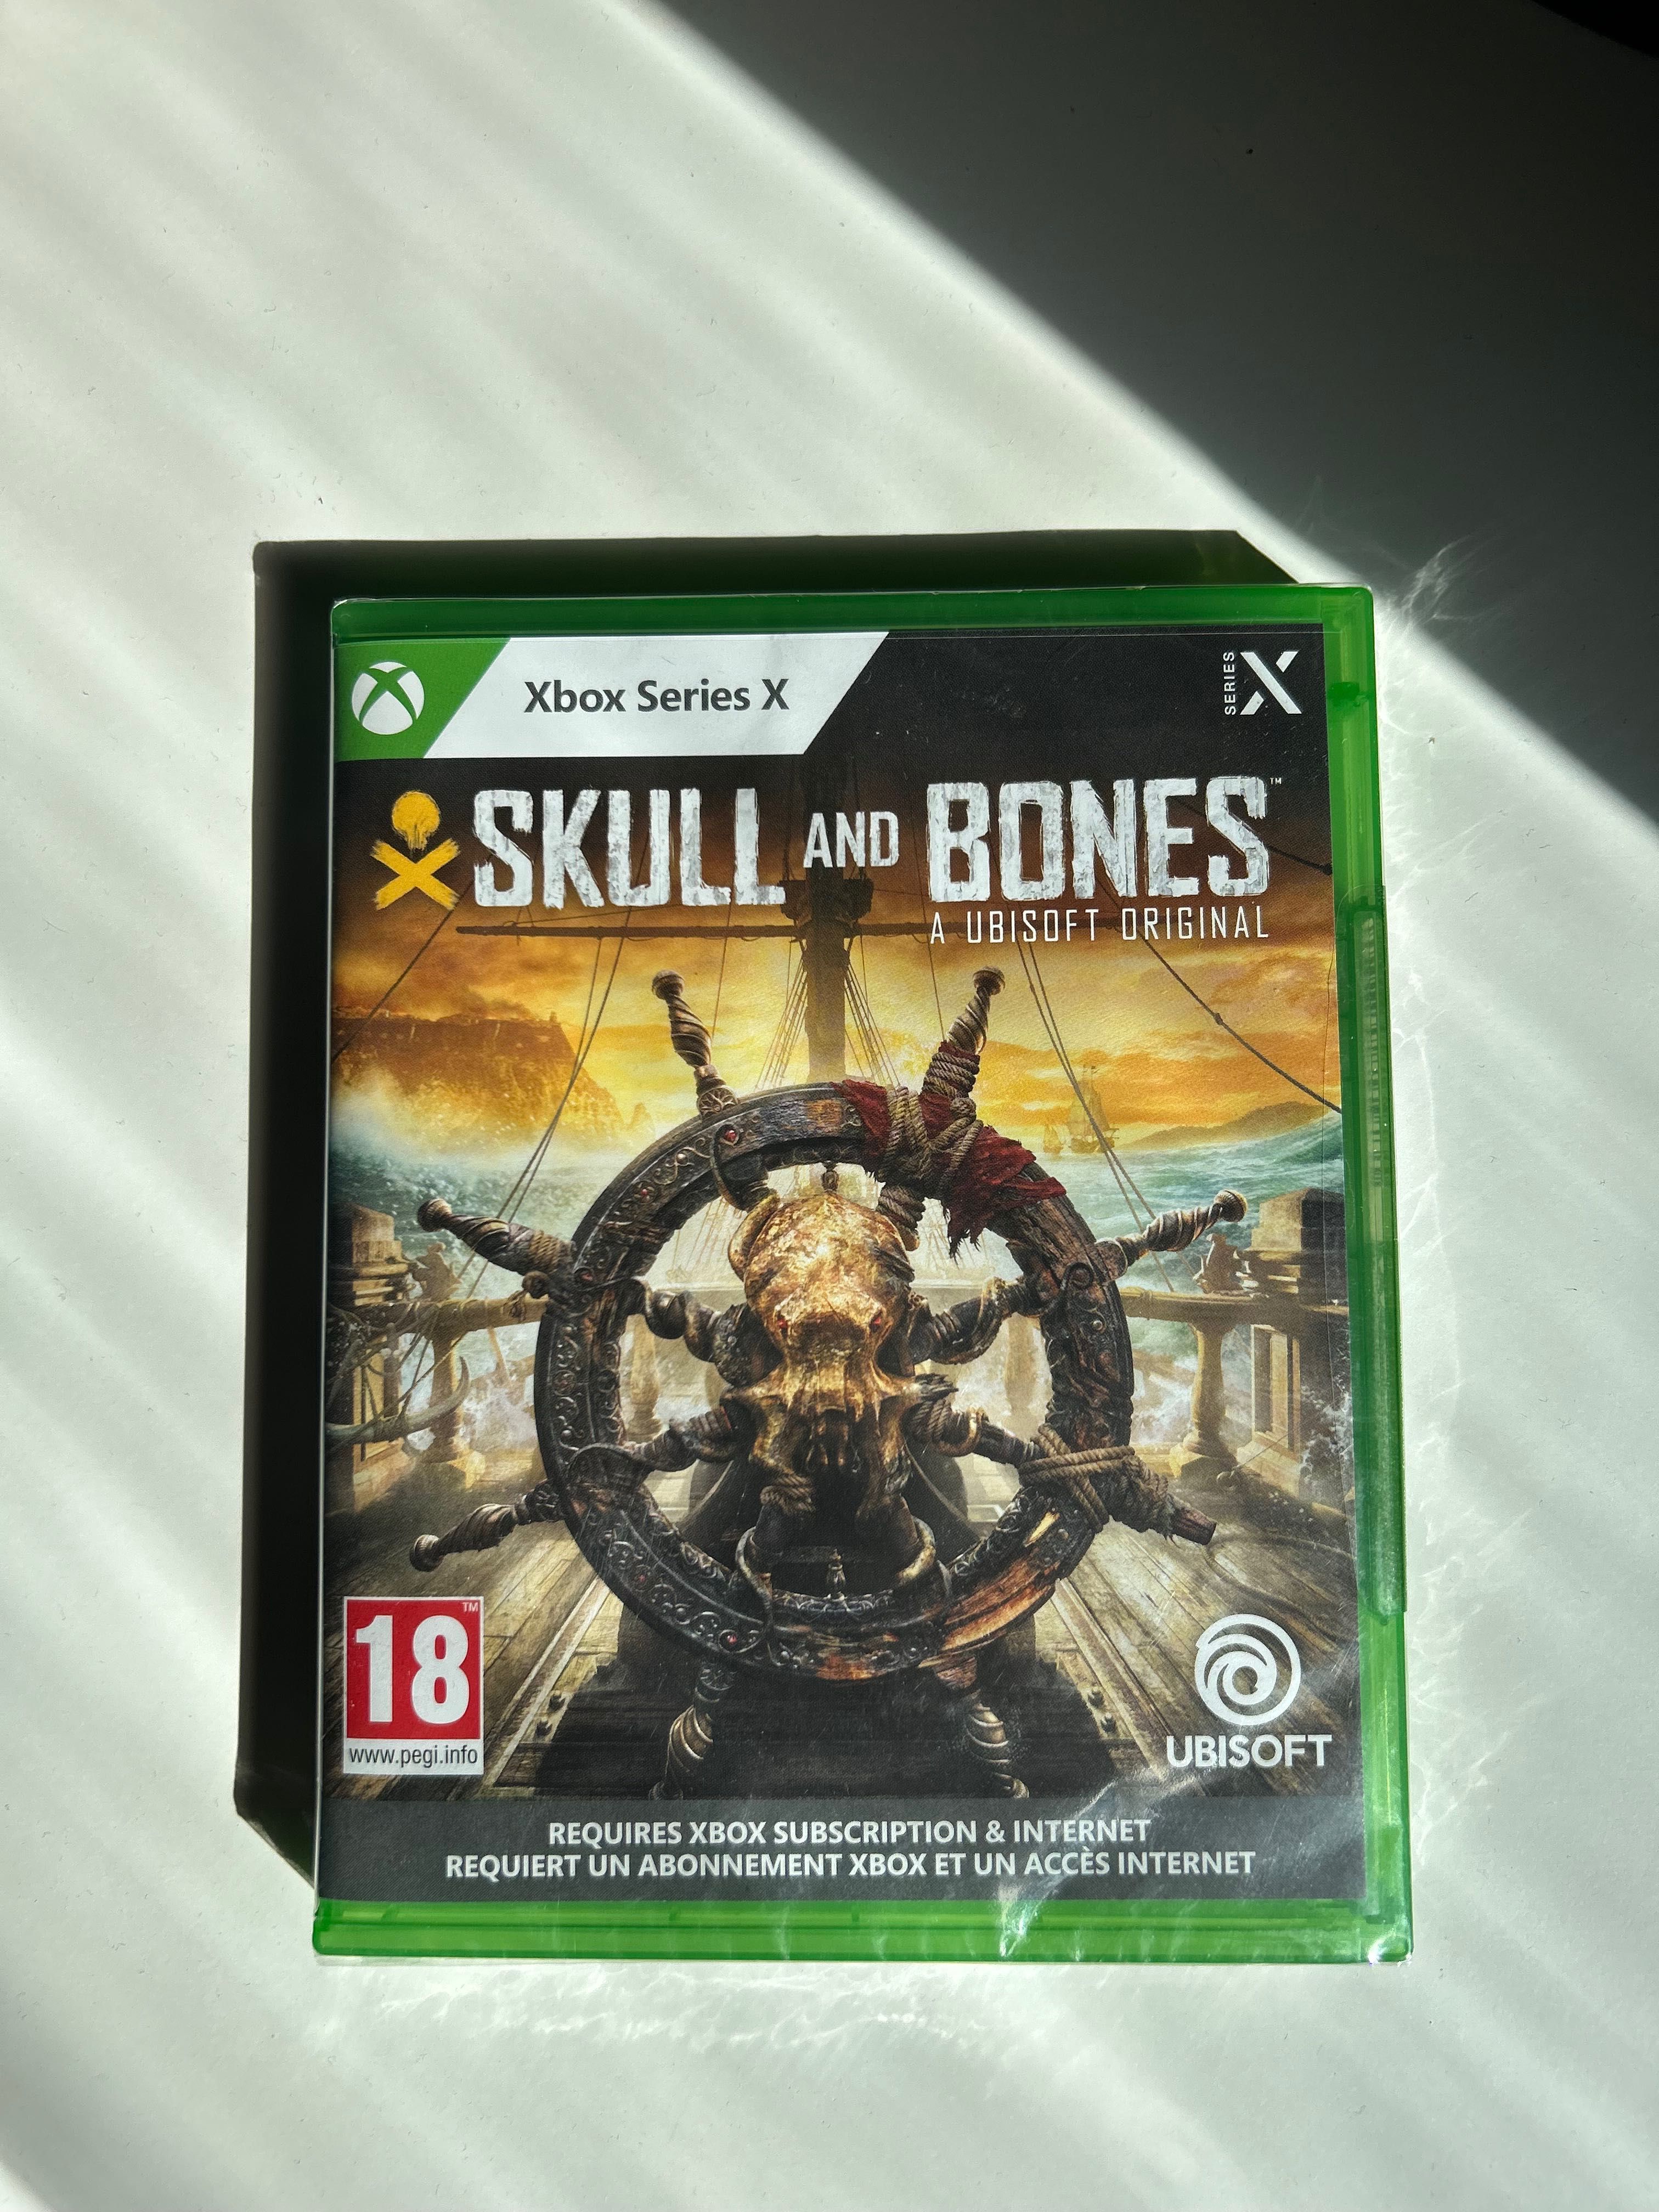 Skull and bones game xbox series x